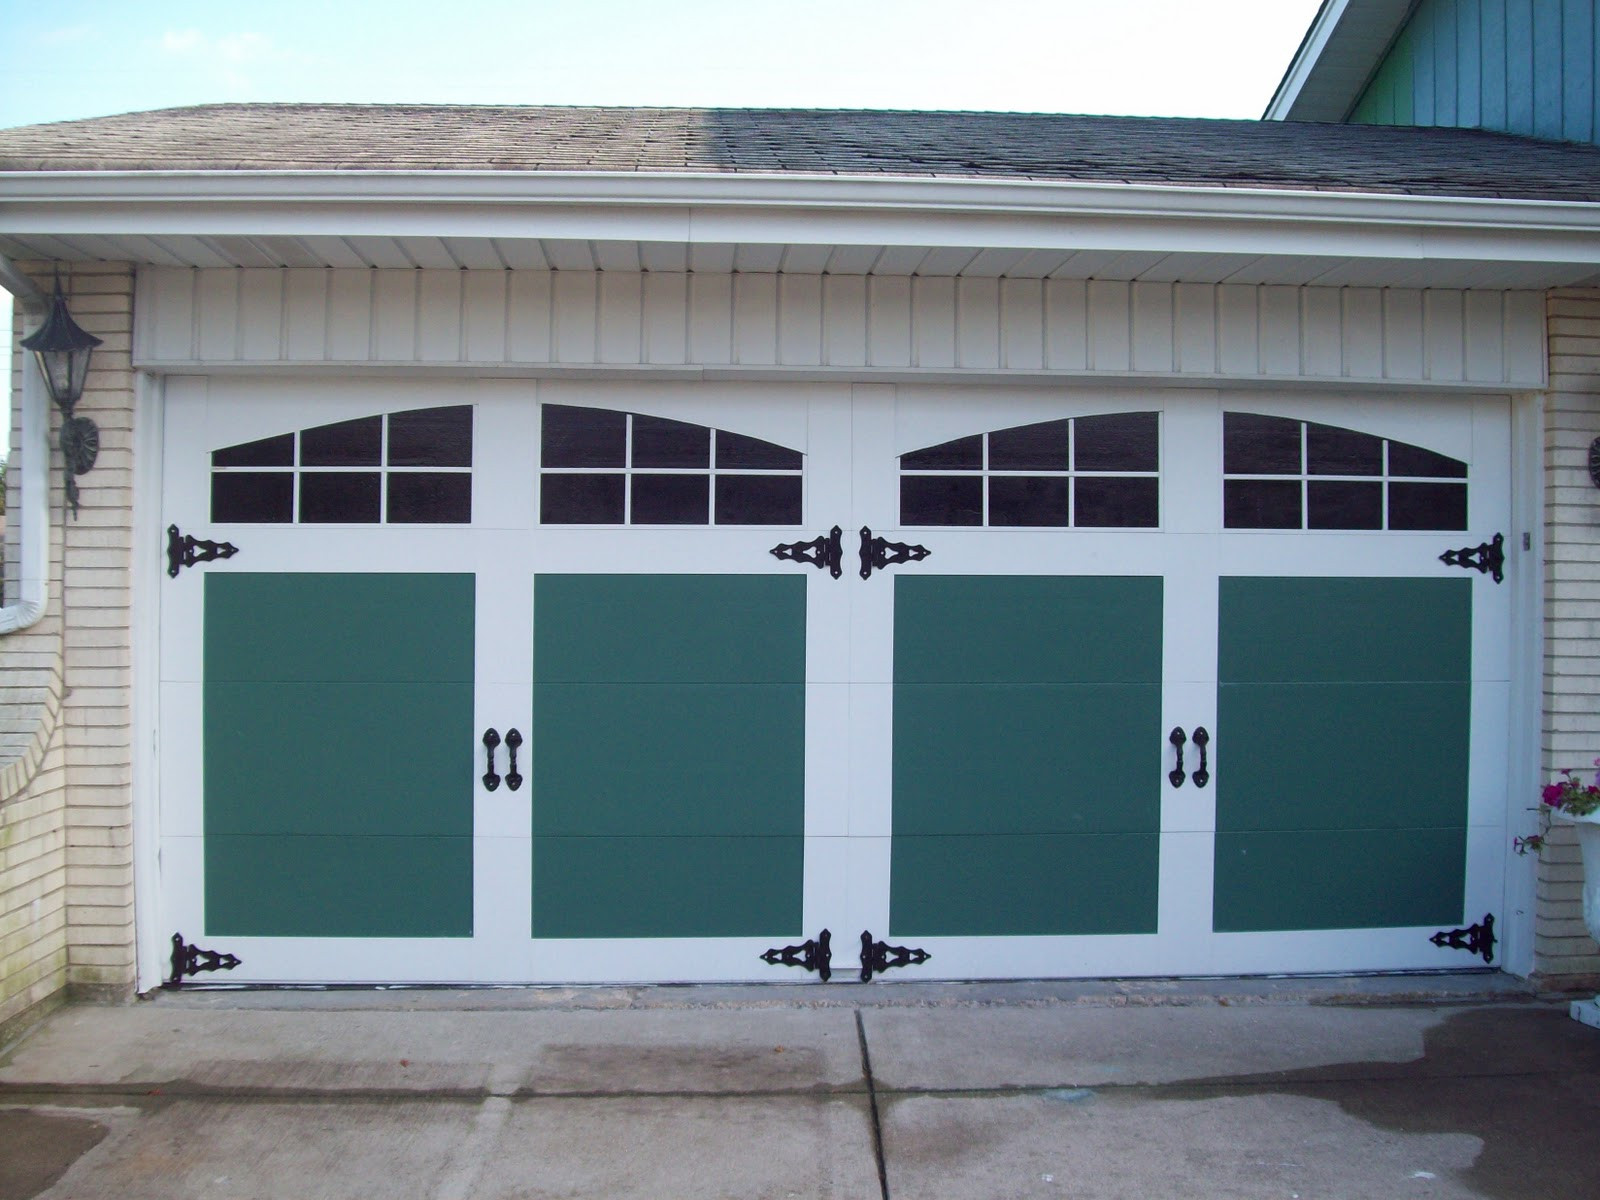 Best ideas about Garage Door Color Ideas
. Save or Pin Garage door paint color ideas steel carriage house garage Now.